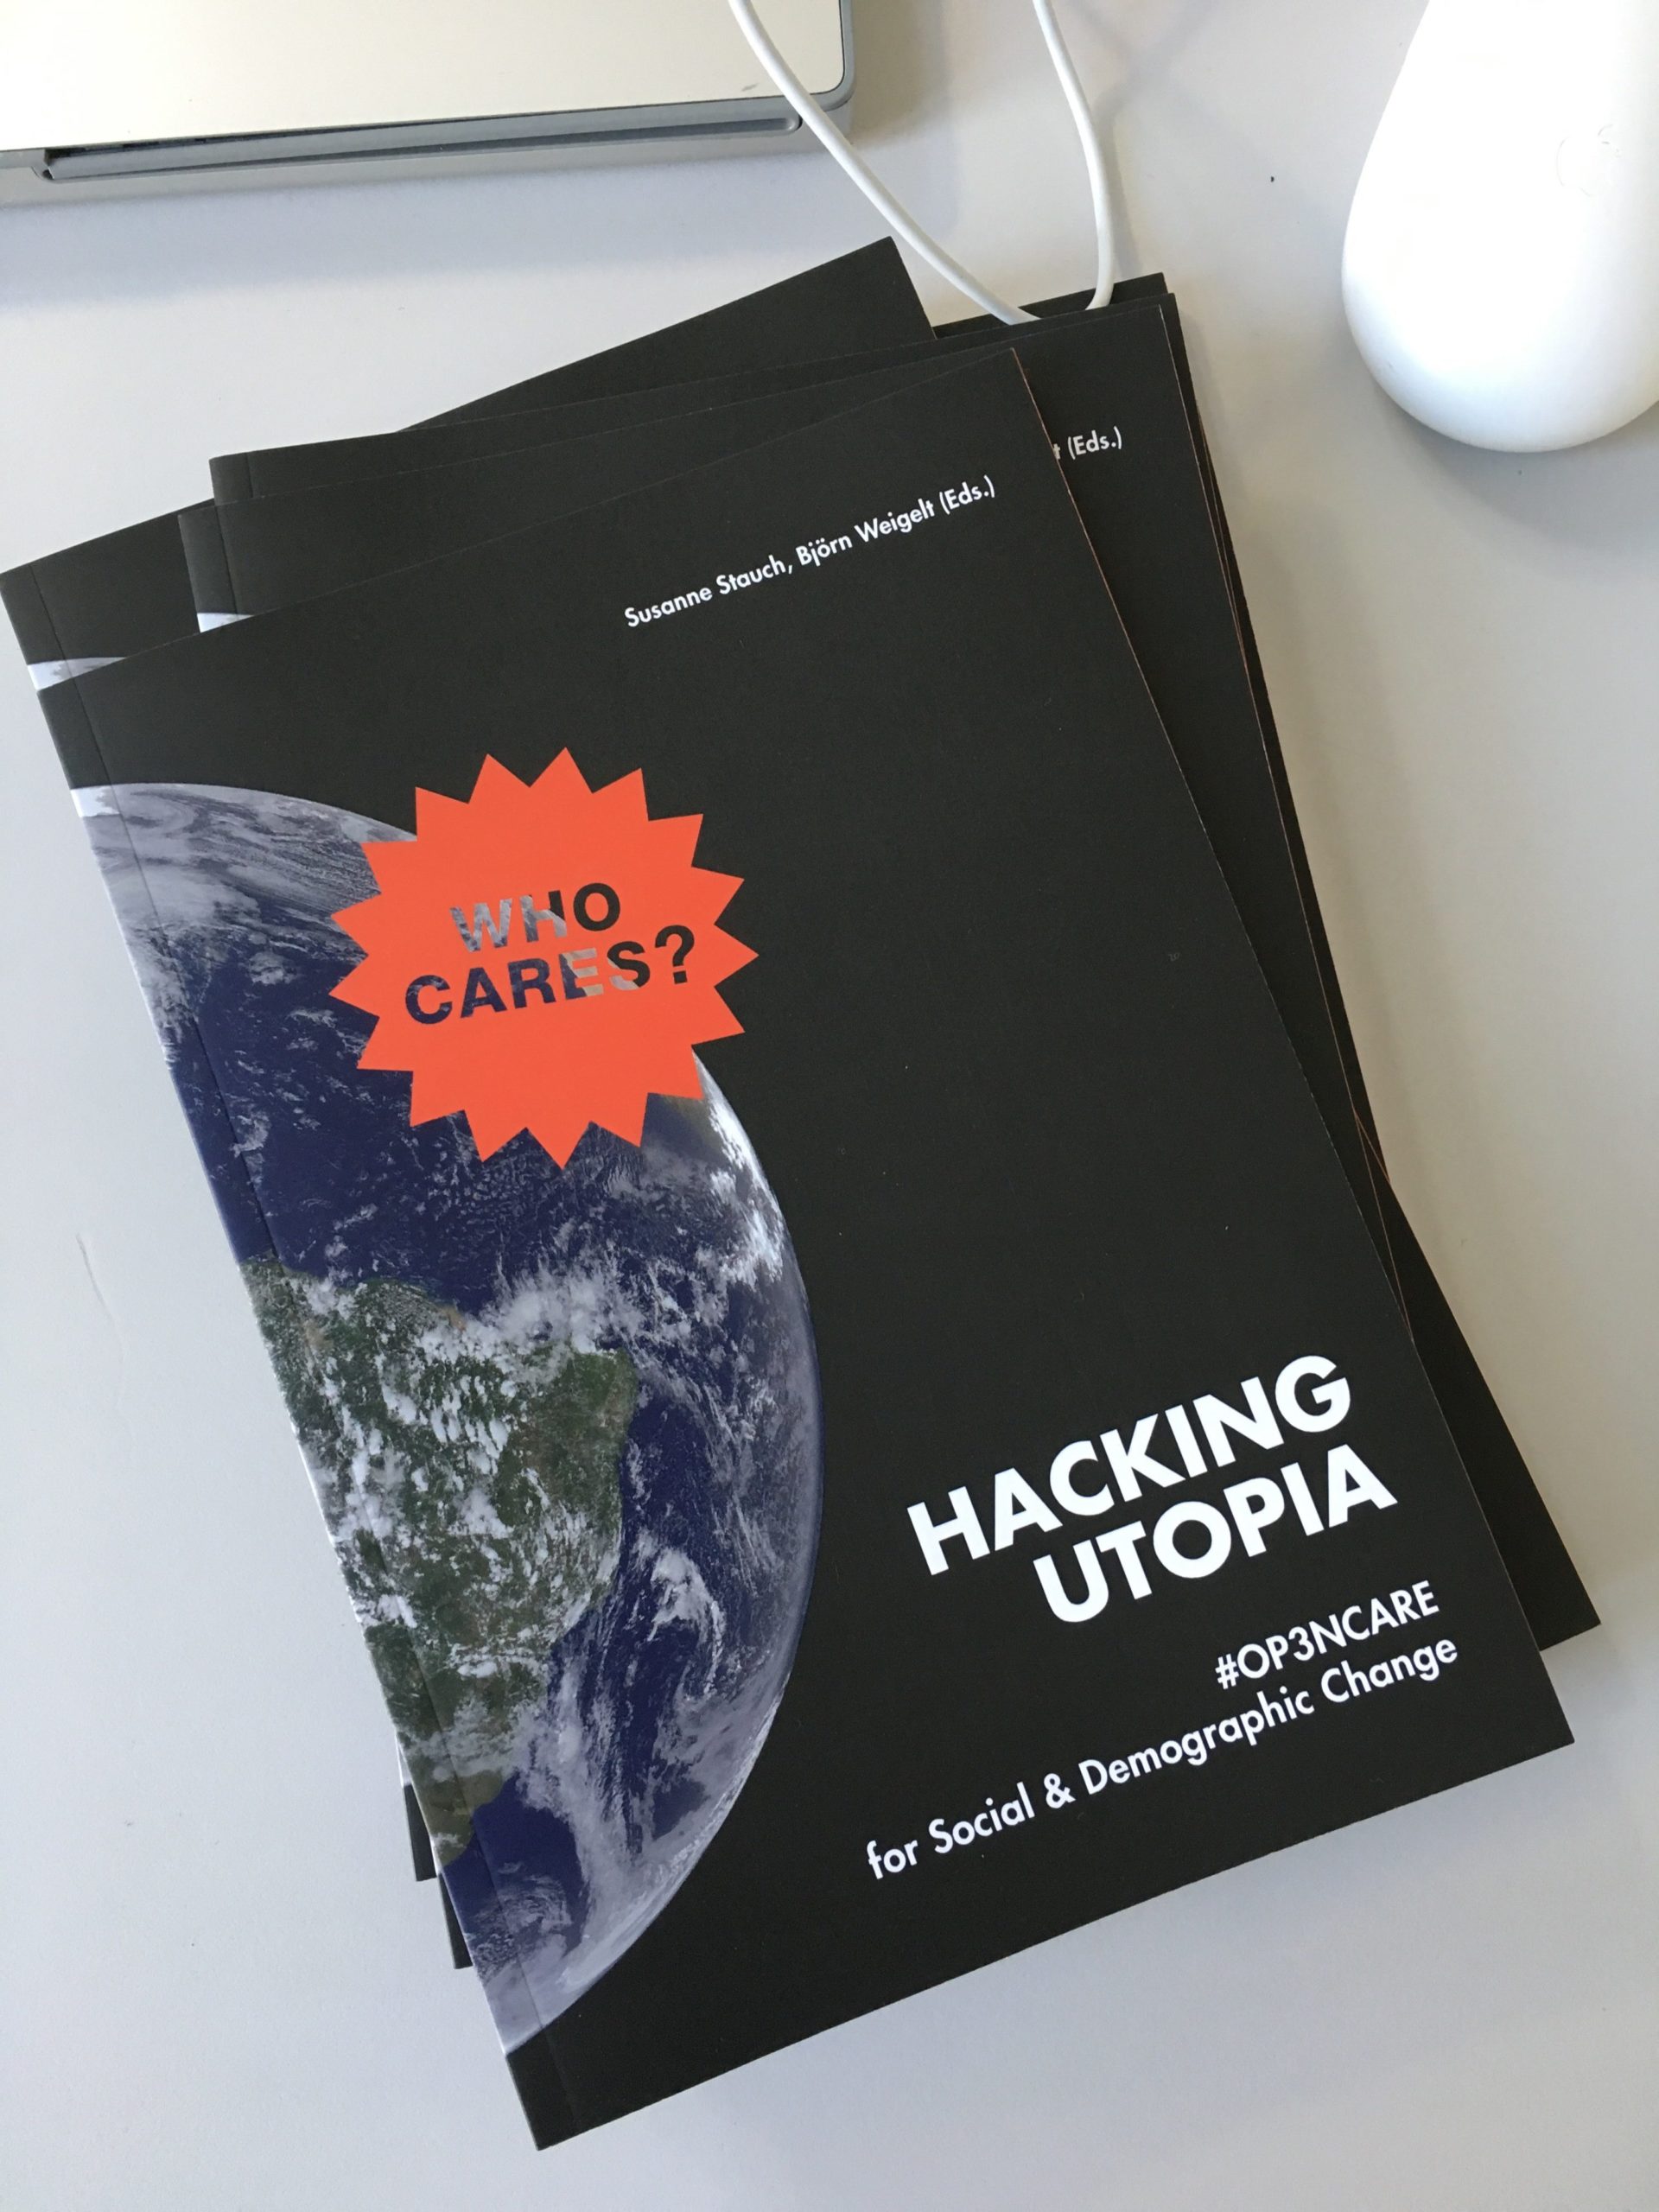 Hacking Utopia Documentation